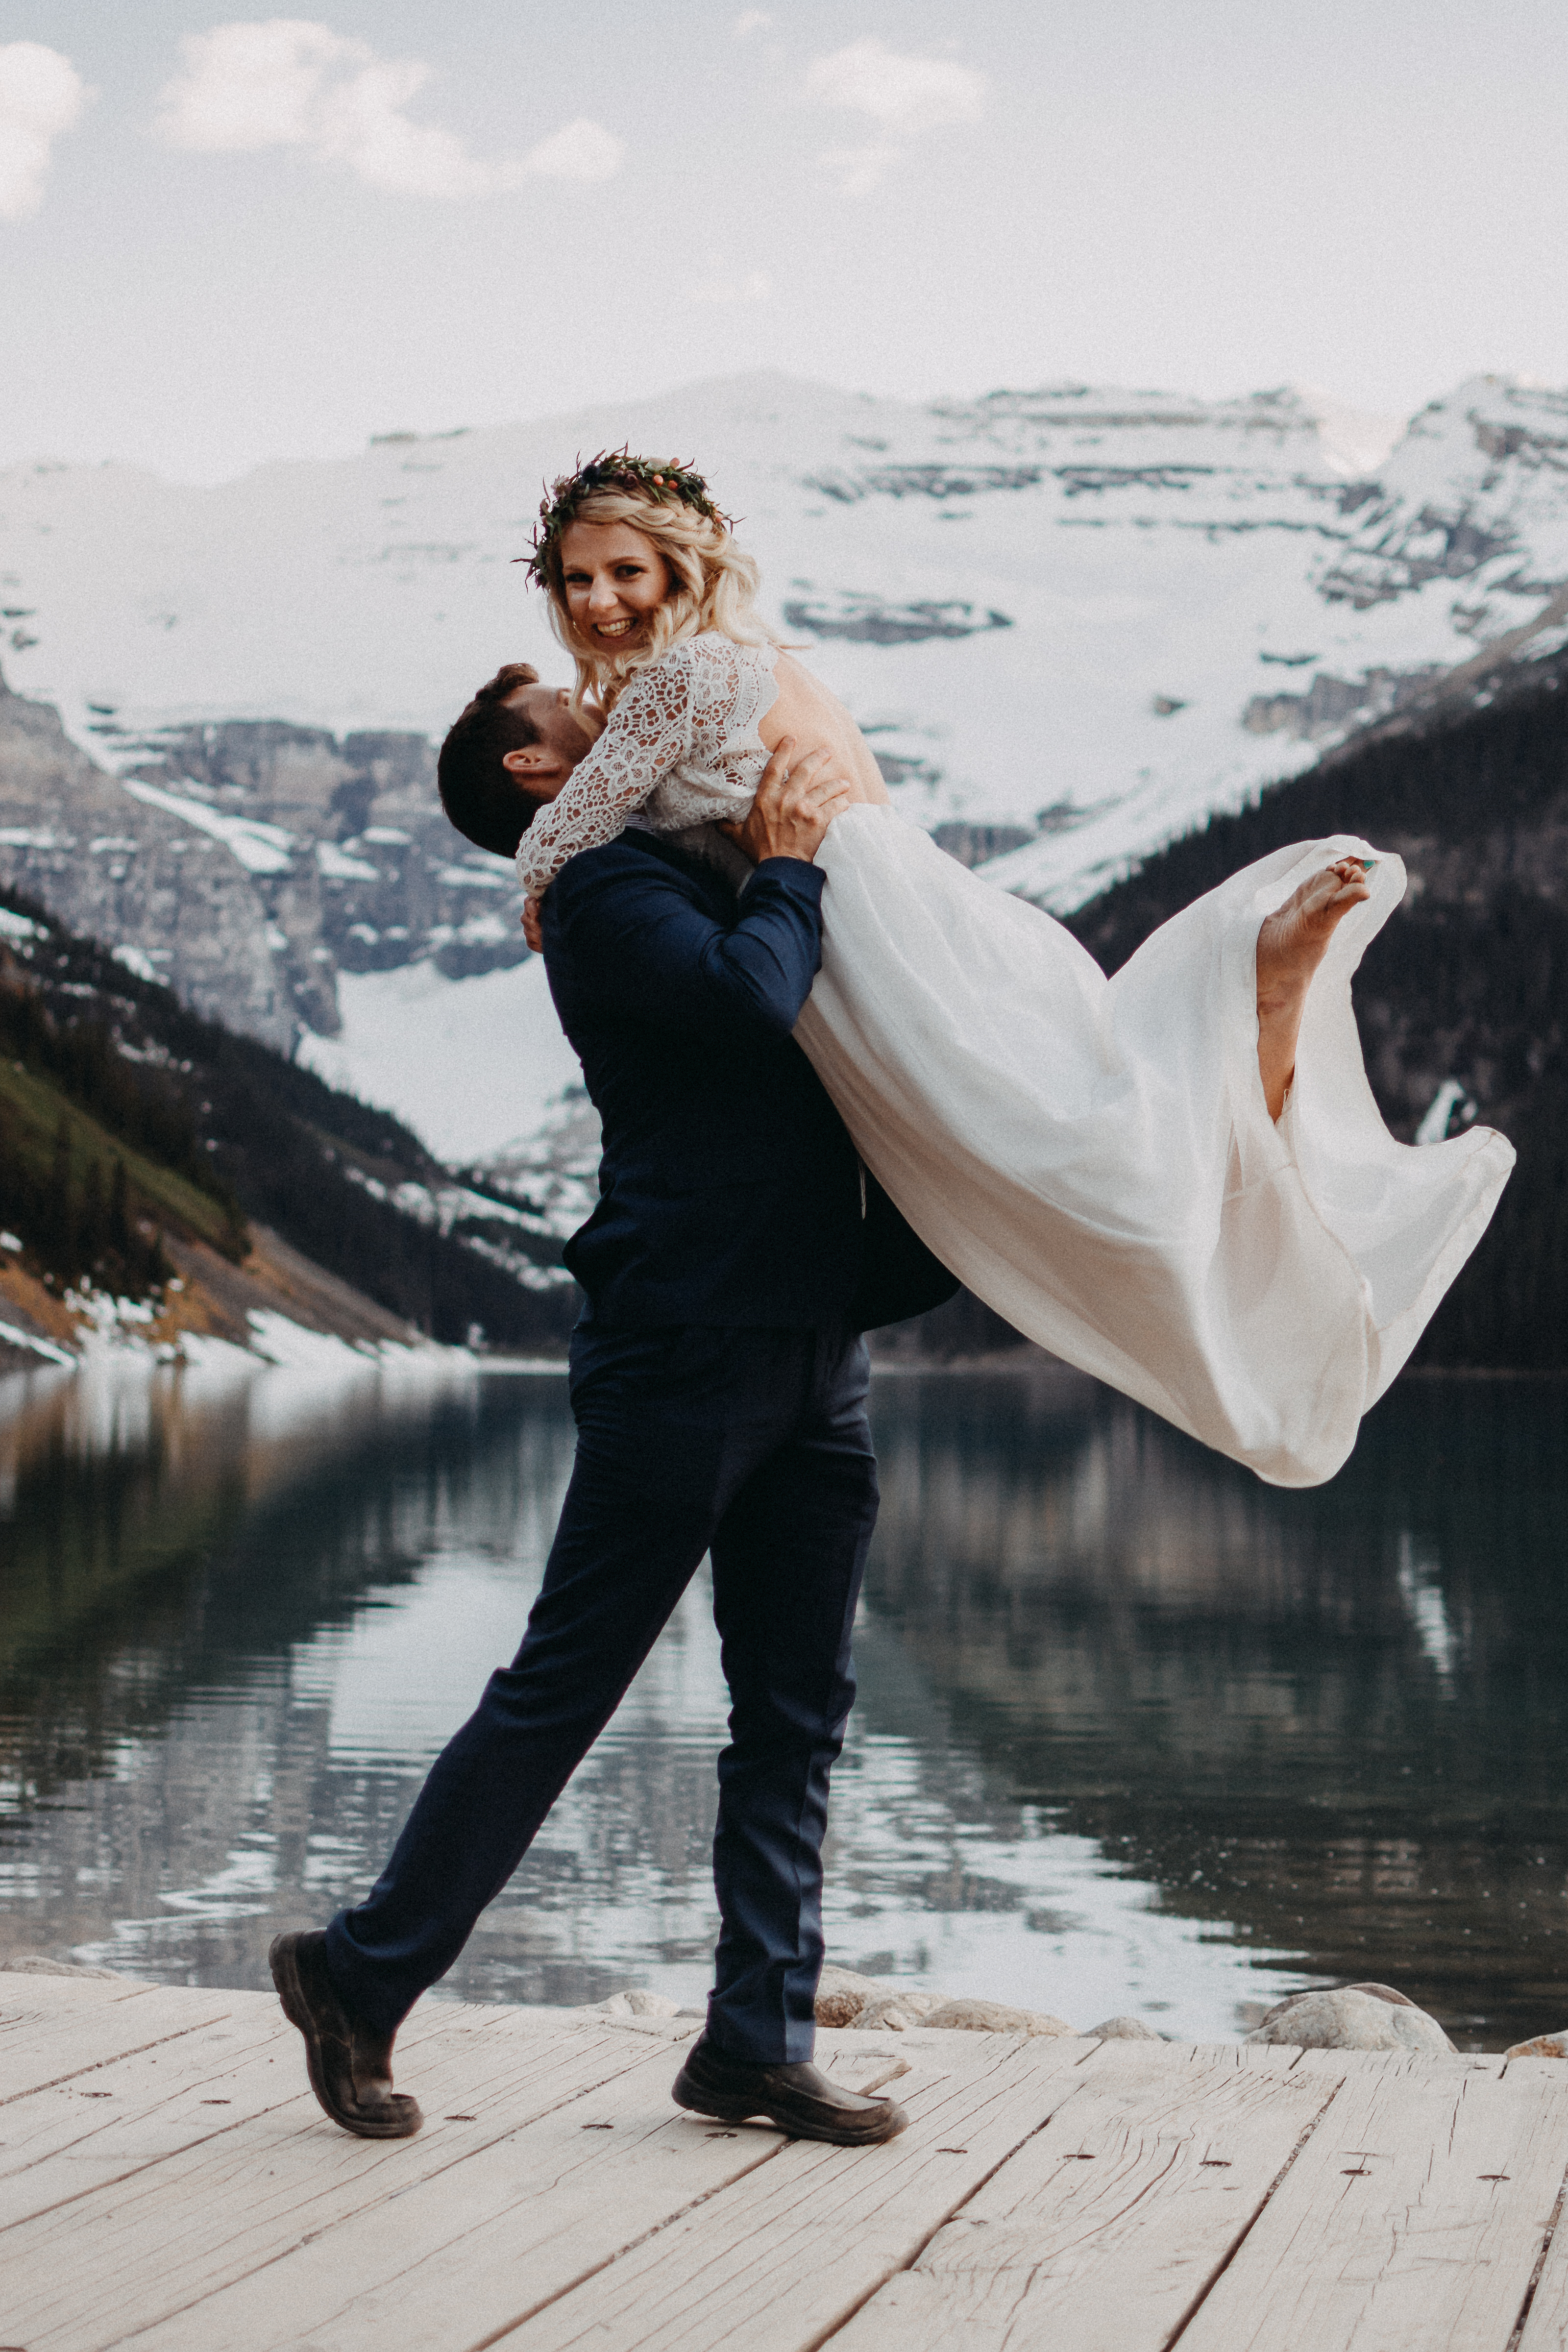 The groom lifting the bride up at Lake Louise, Alberta